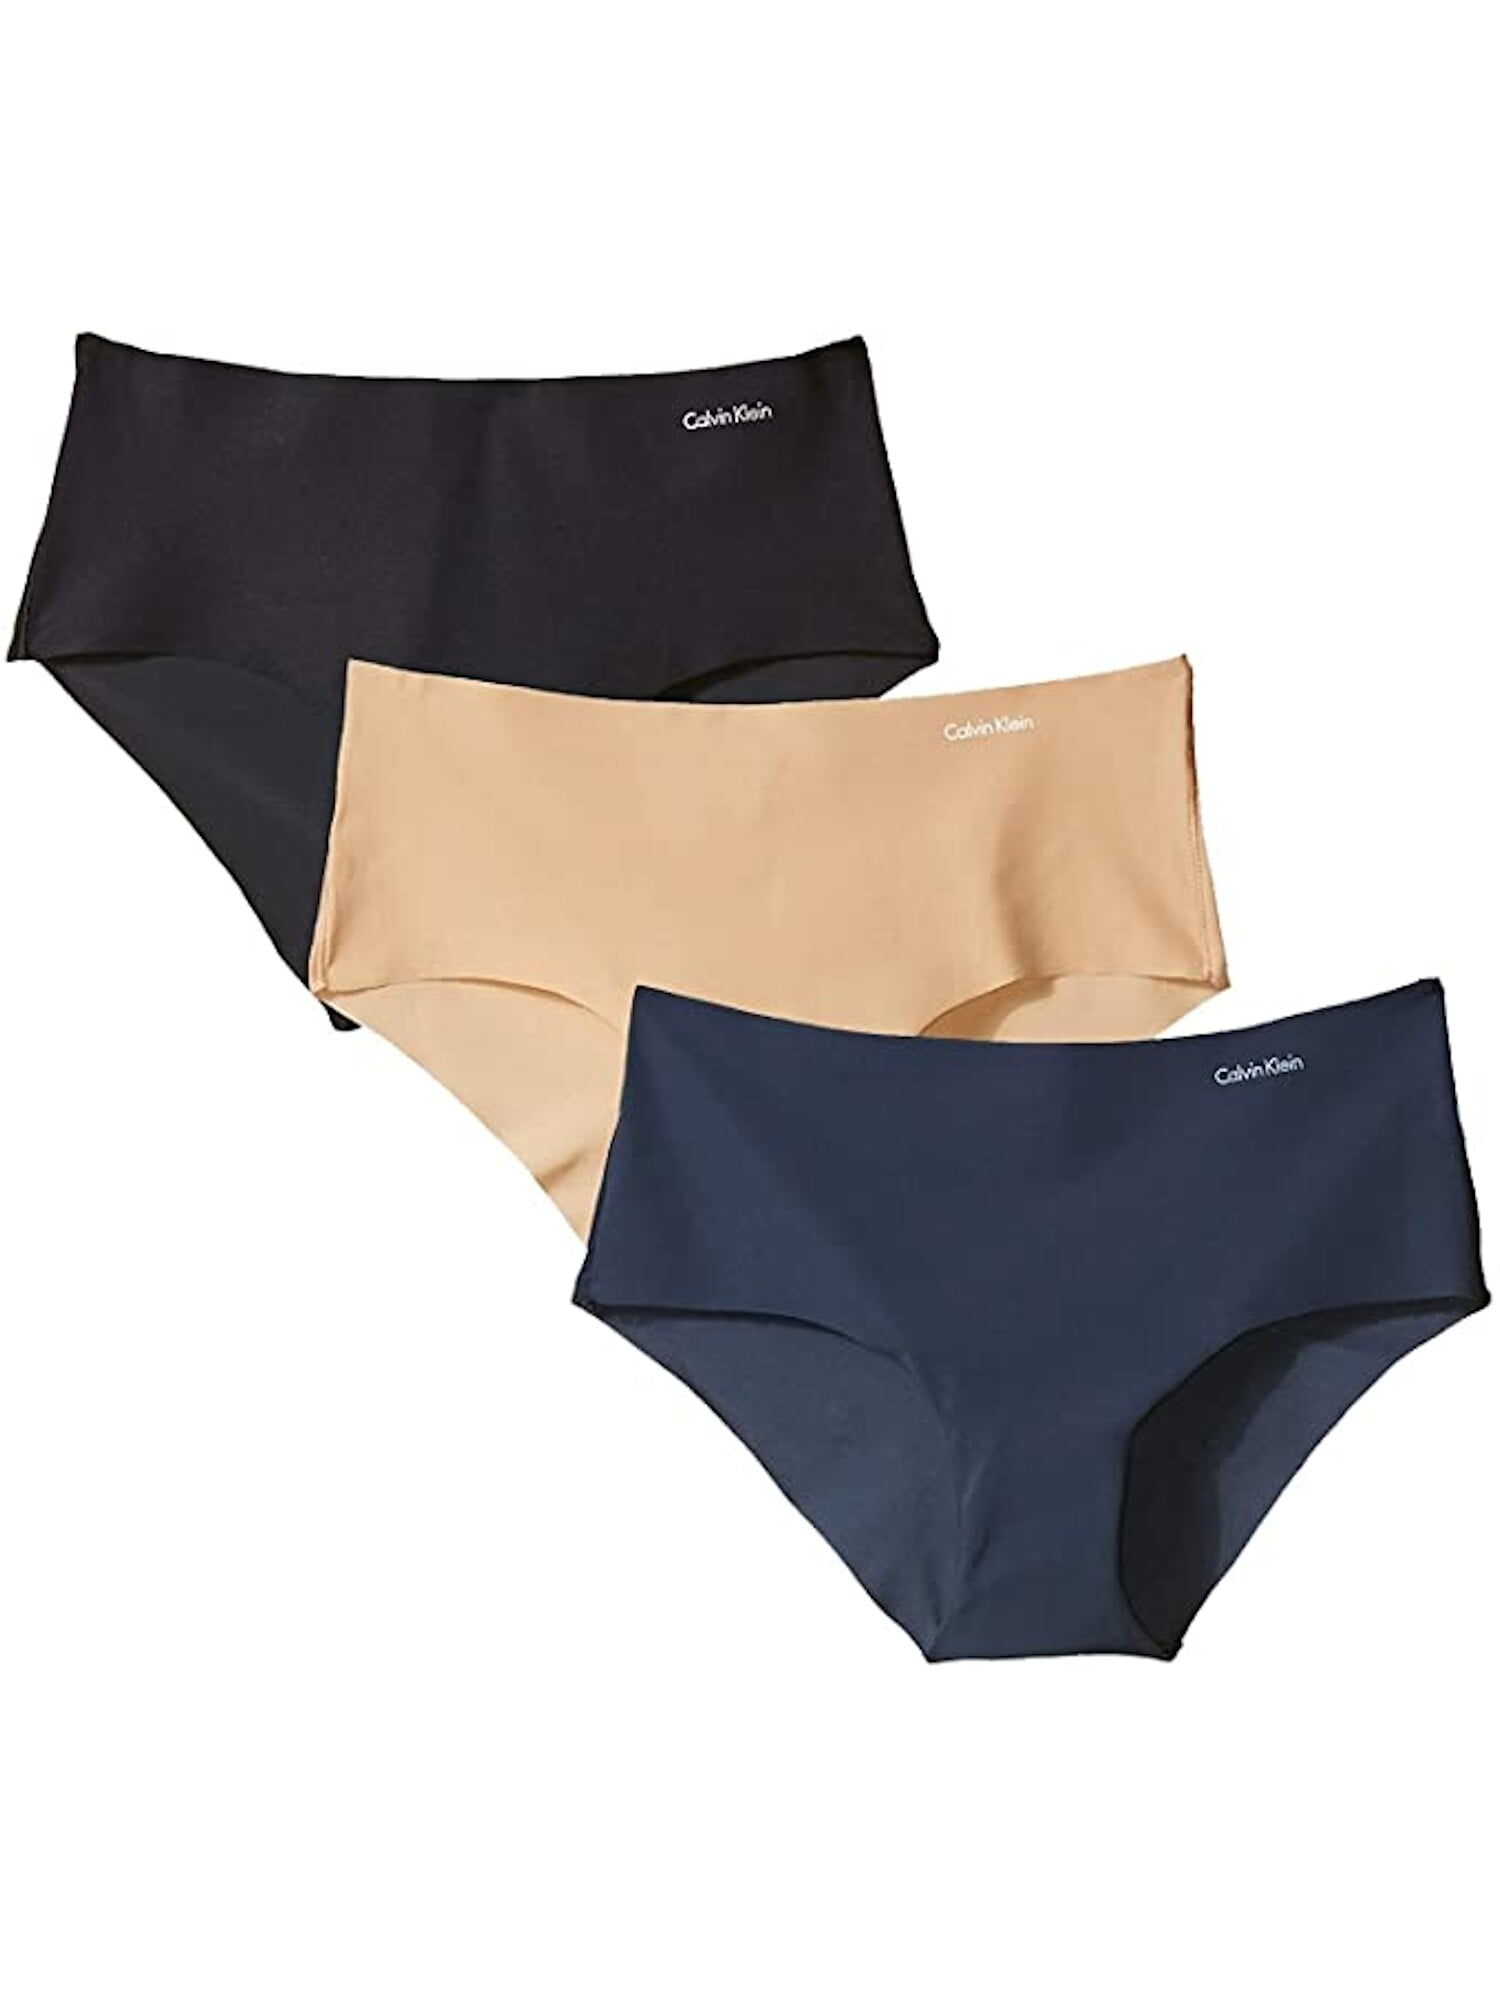 Calvin Klein Invisibles Hipster Panty - 3 Pack in Satelliteraindanceblk  (QD3559), Size Medium, HerRoom.com